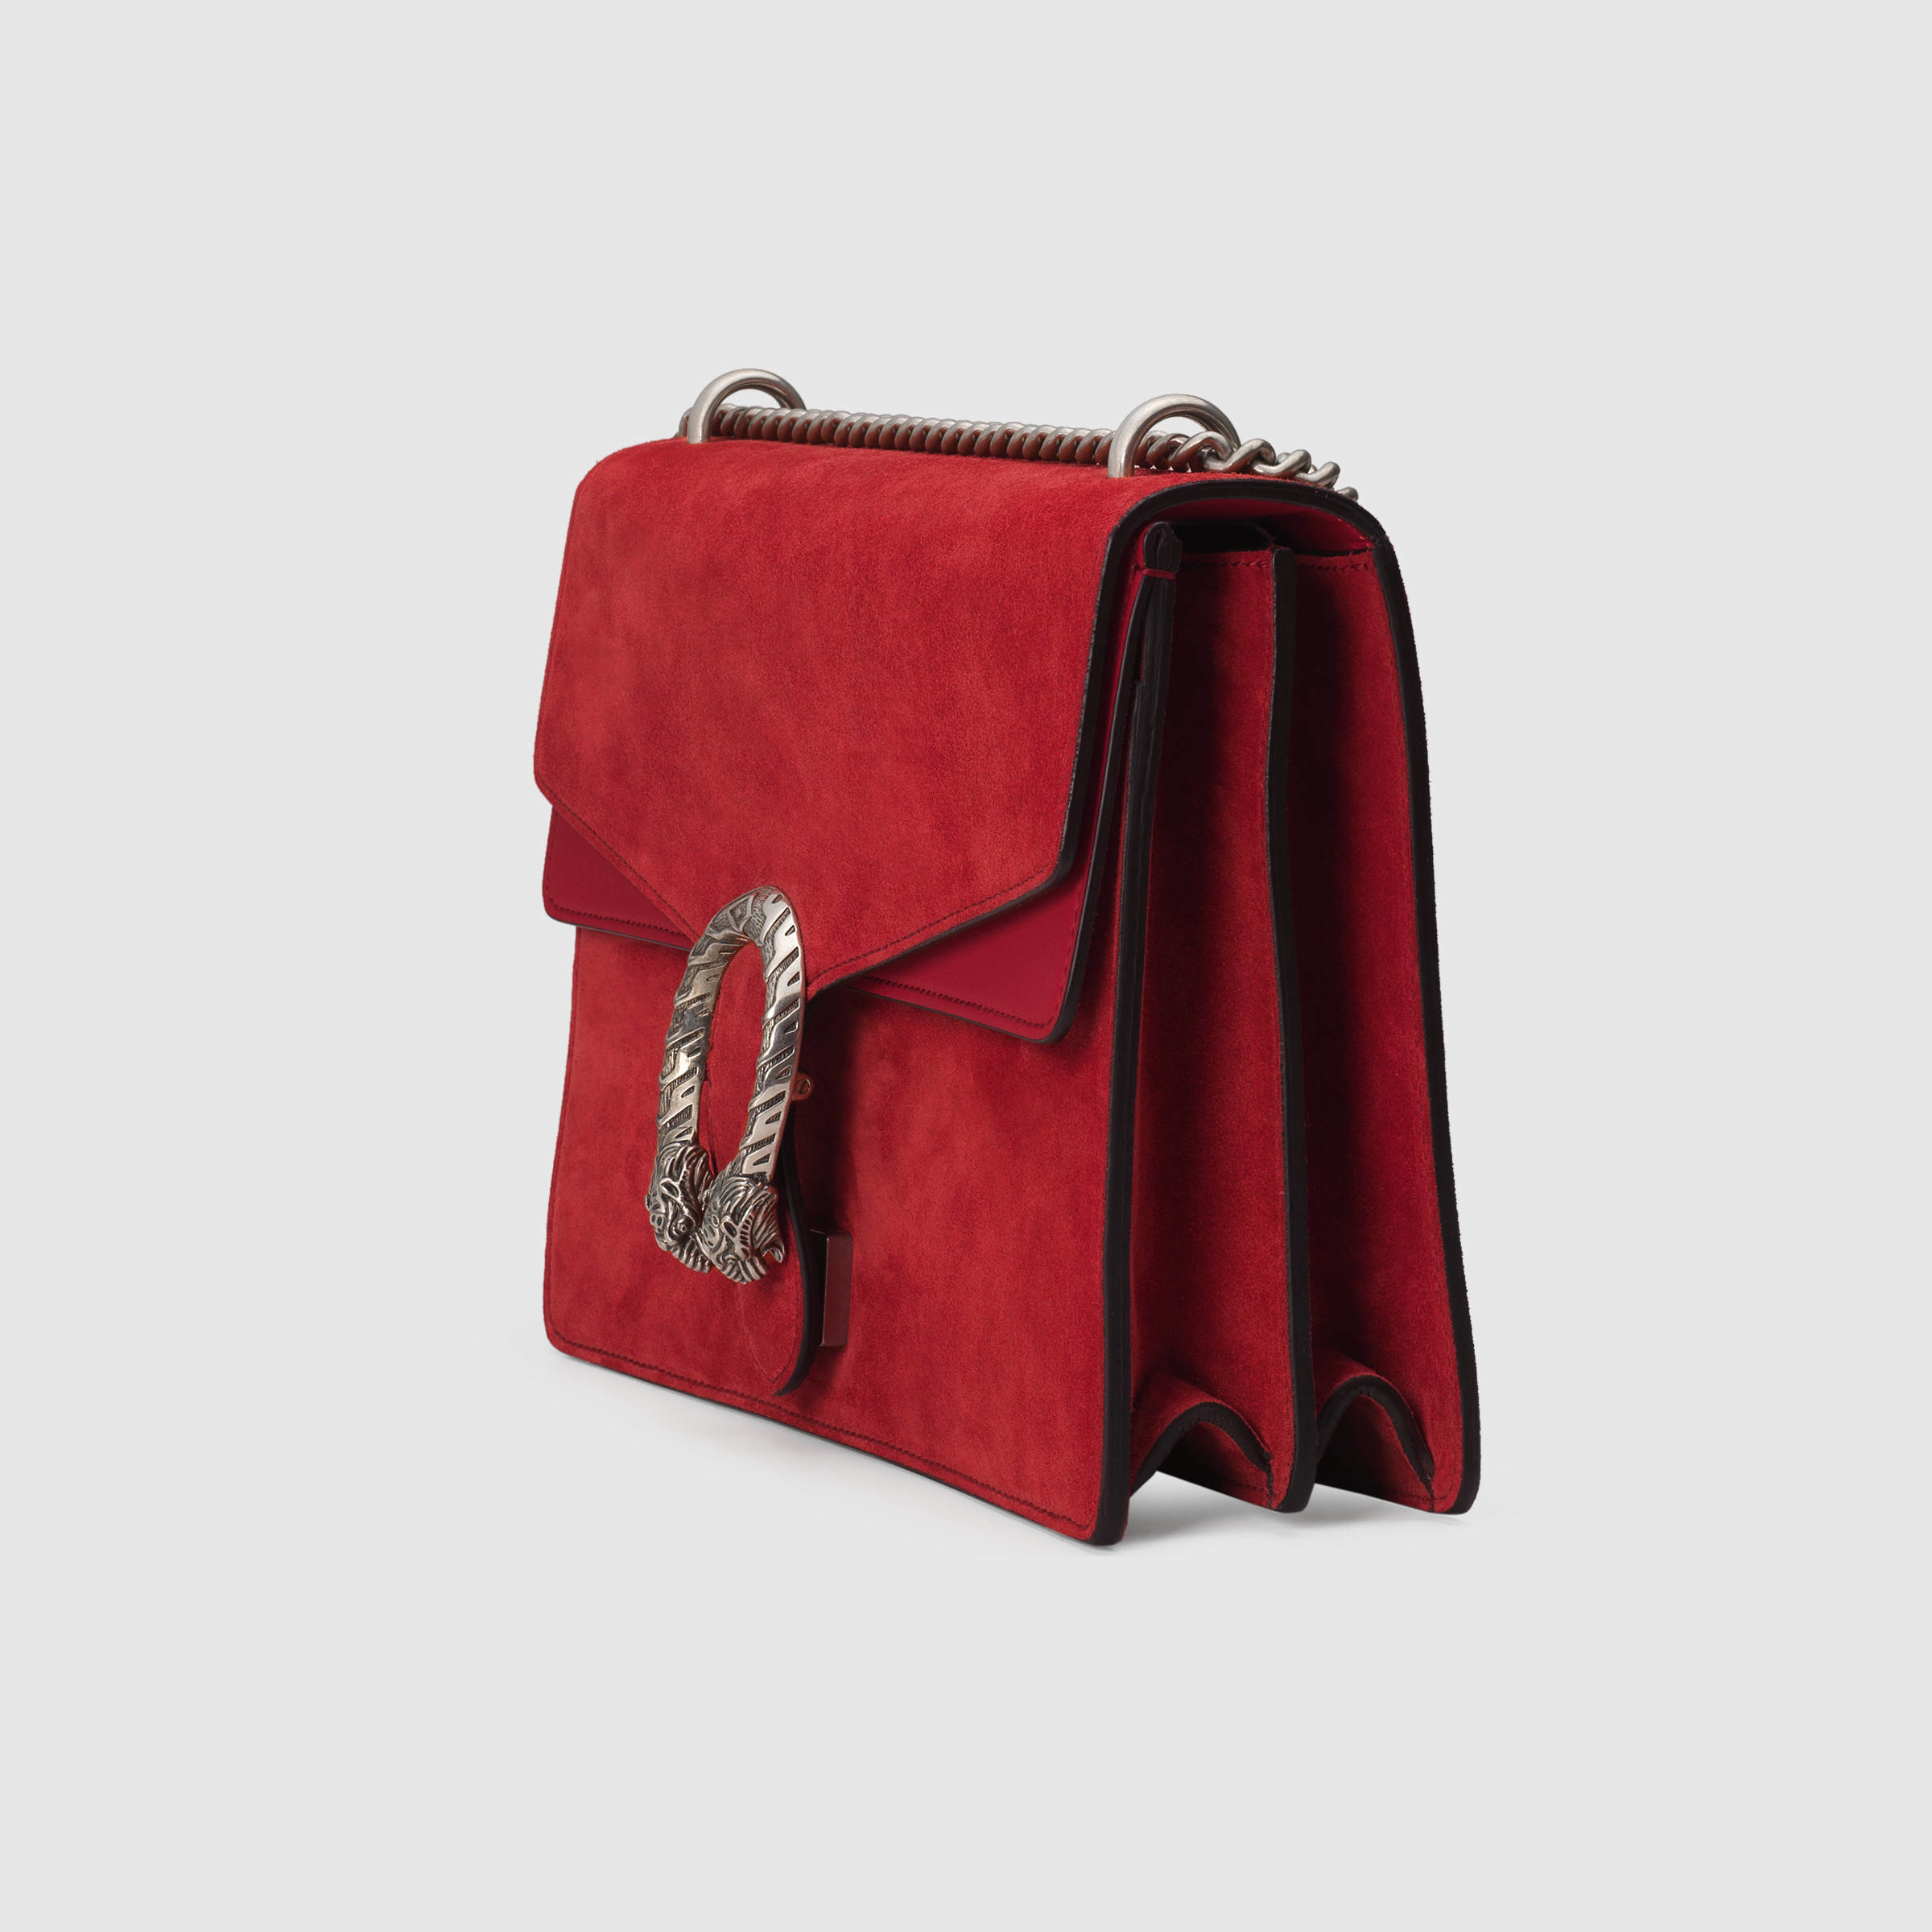 Gucci Dionysus Suede Shoulder Bag in Red Suede (Red) - Lyst